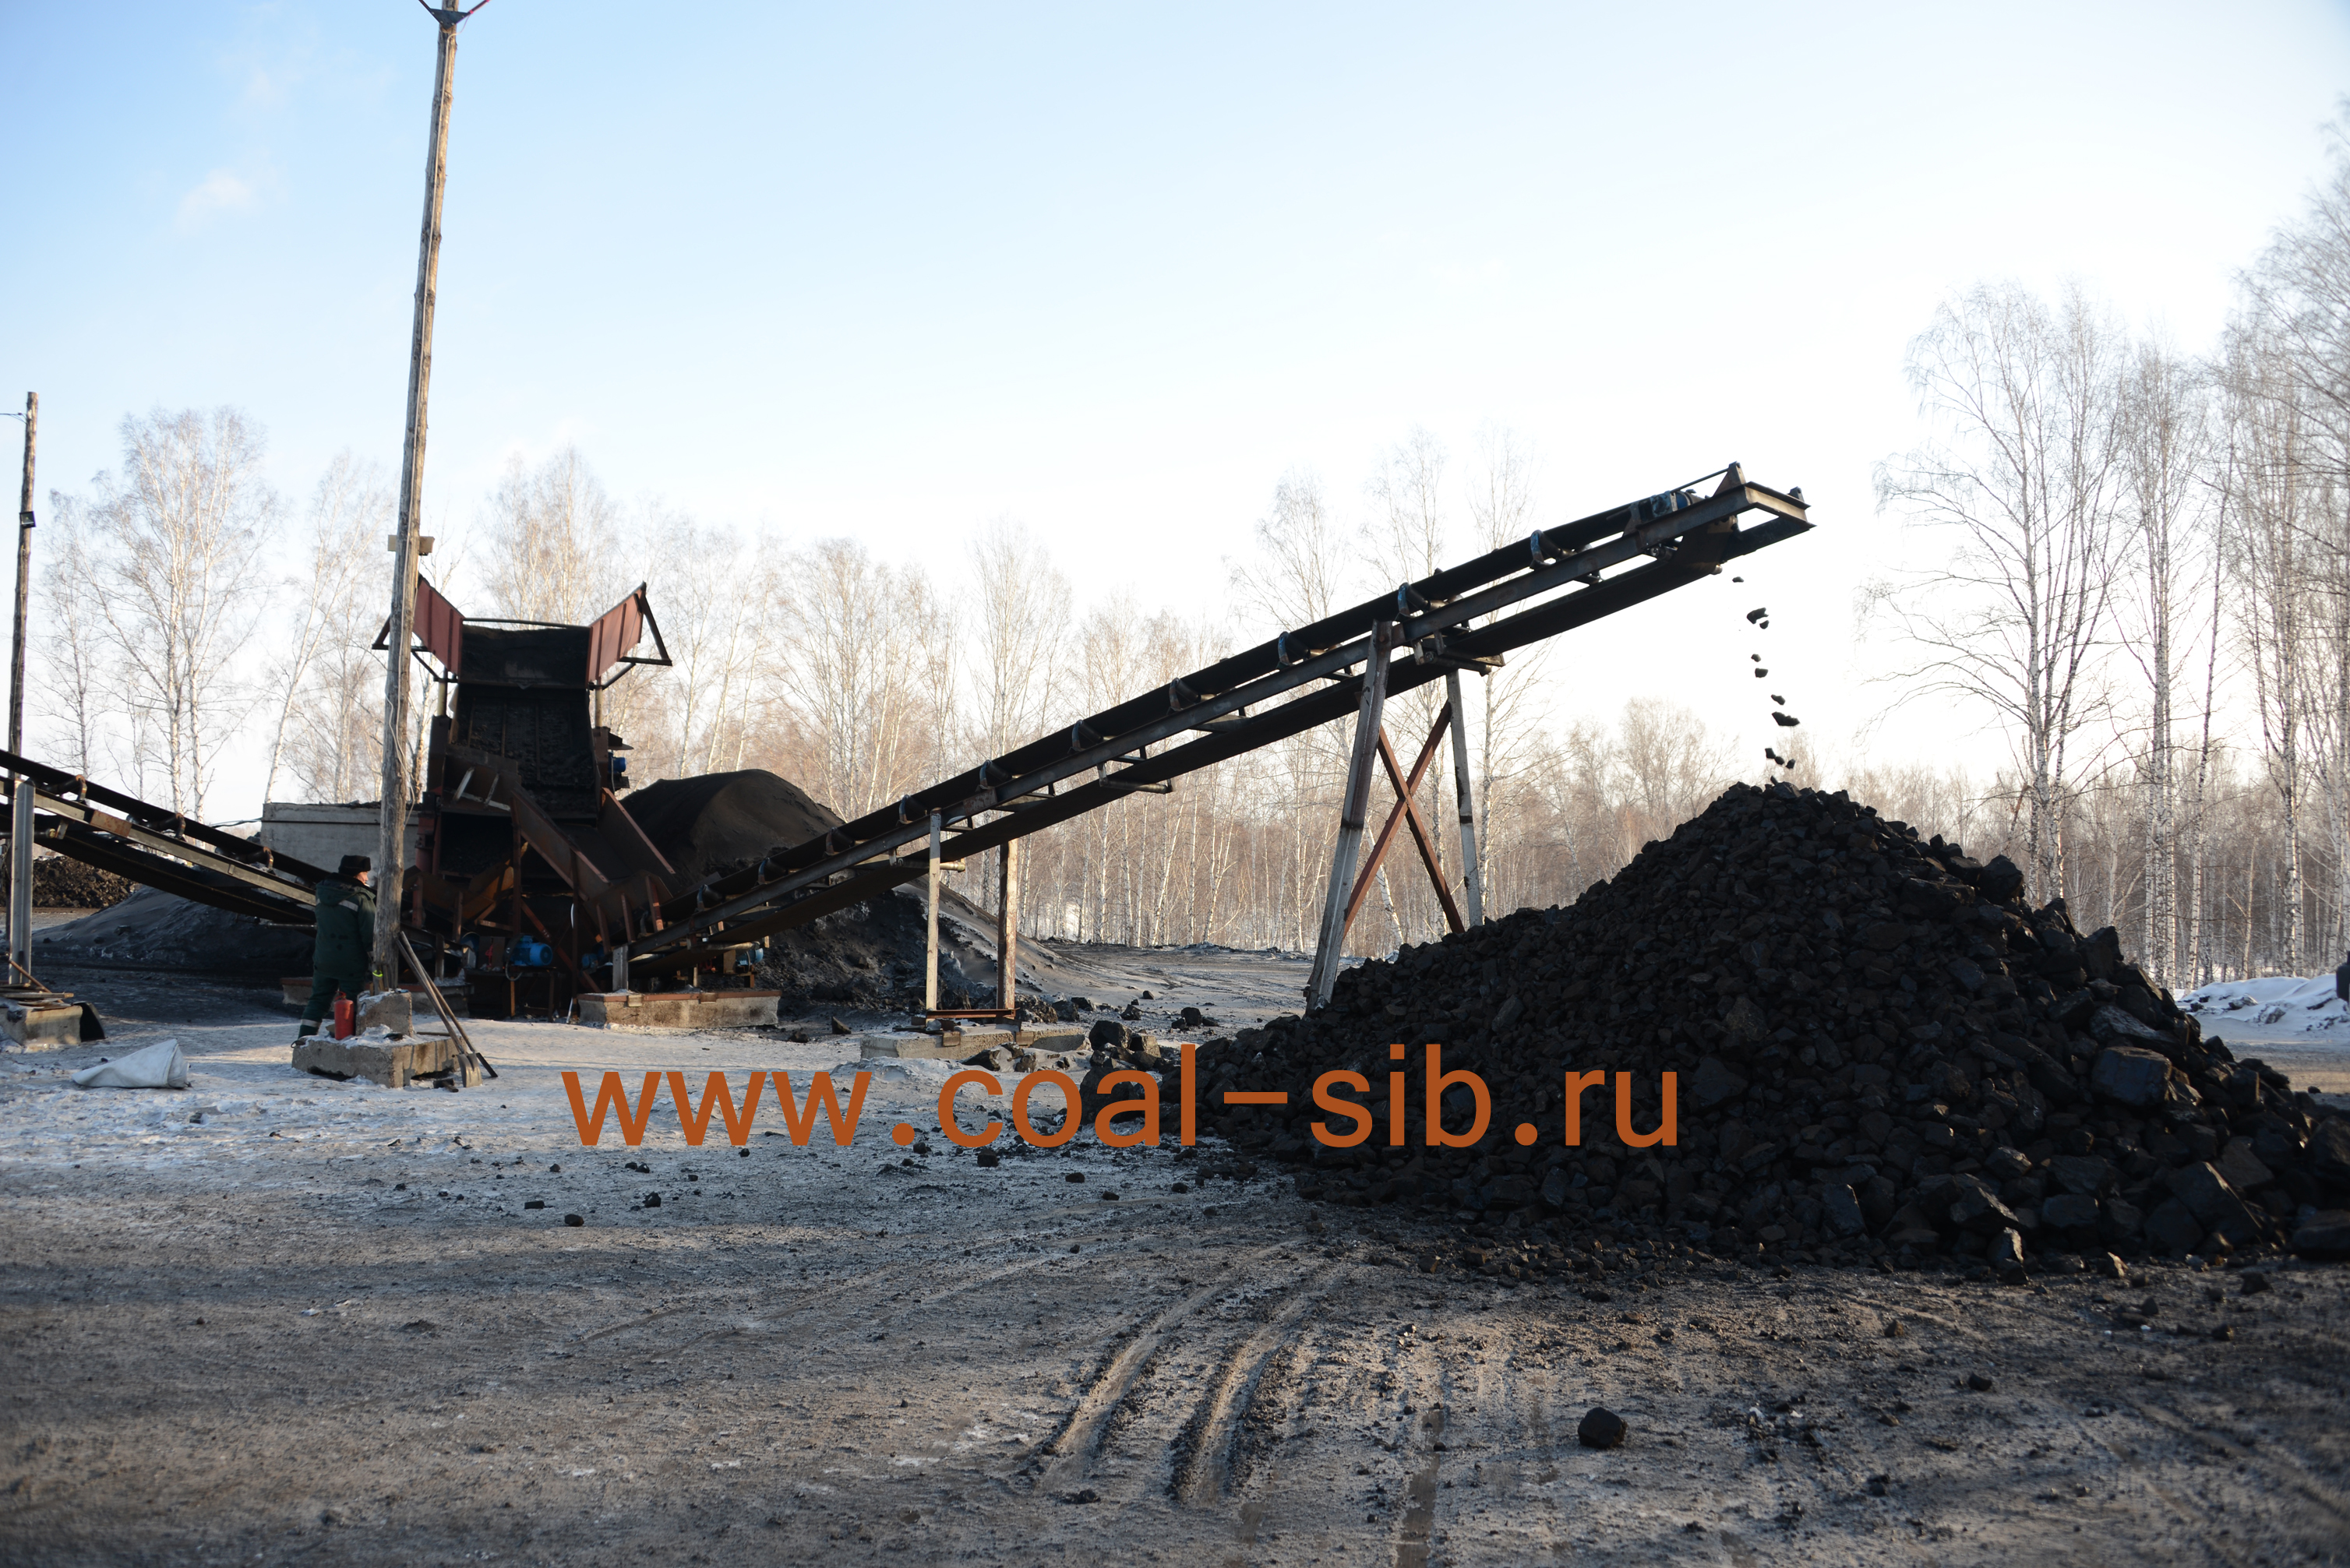 Steam coal russia фото 12